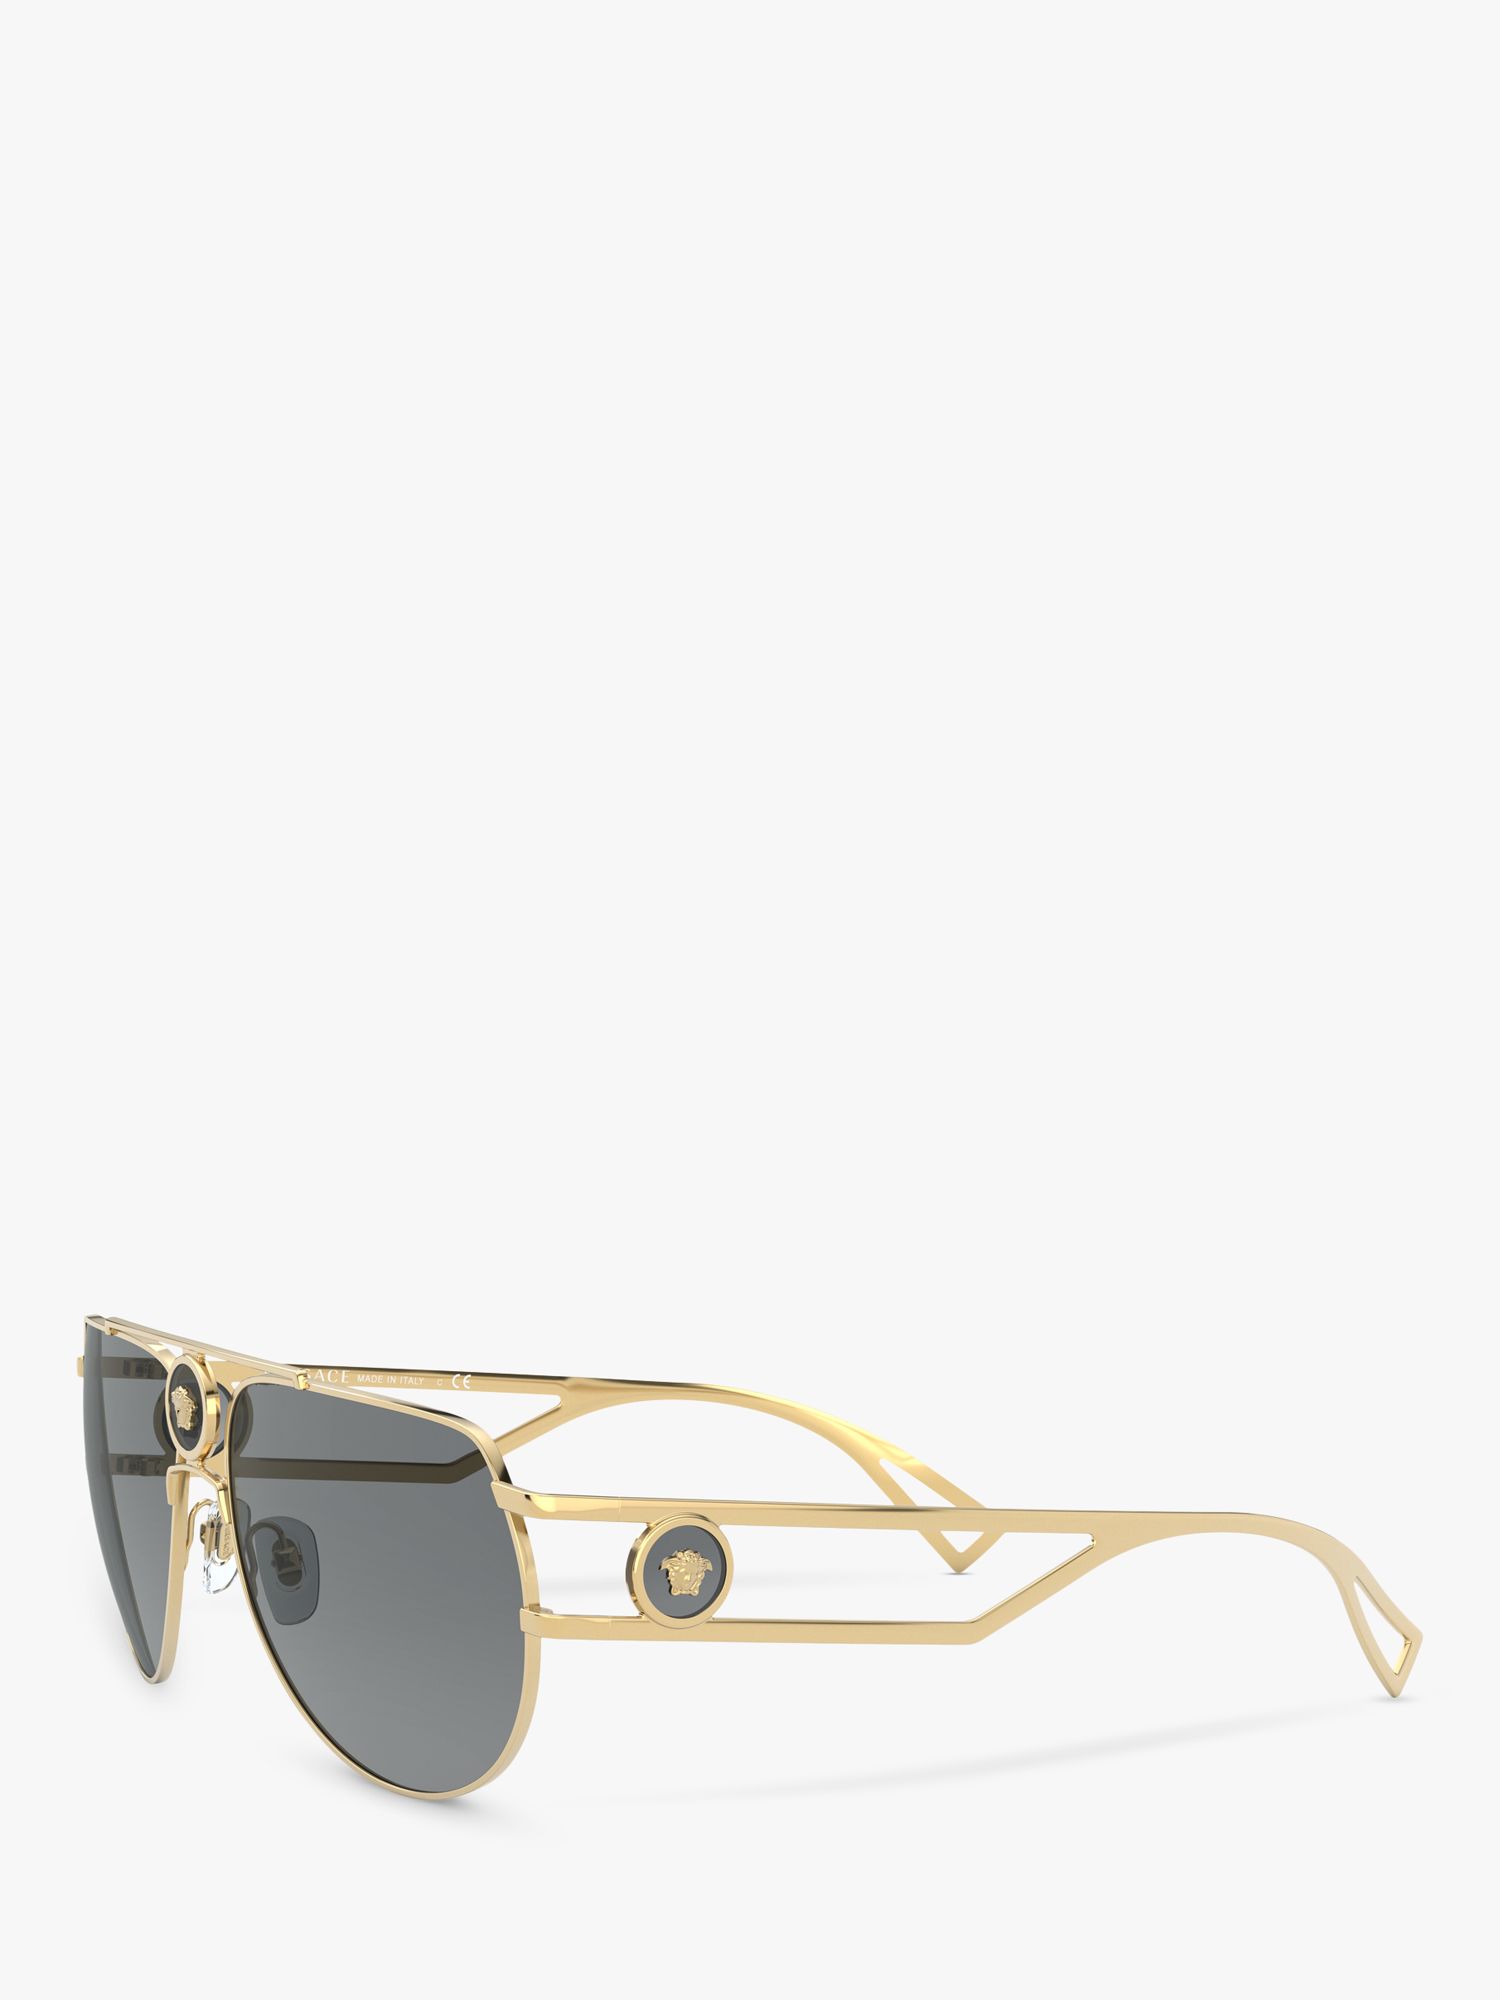 Buy Versace VE2225 Men's Aviator Sunglasses, Gold Online at johnlewis.com